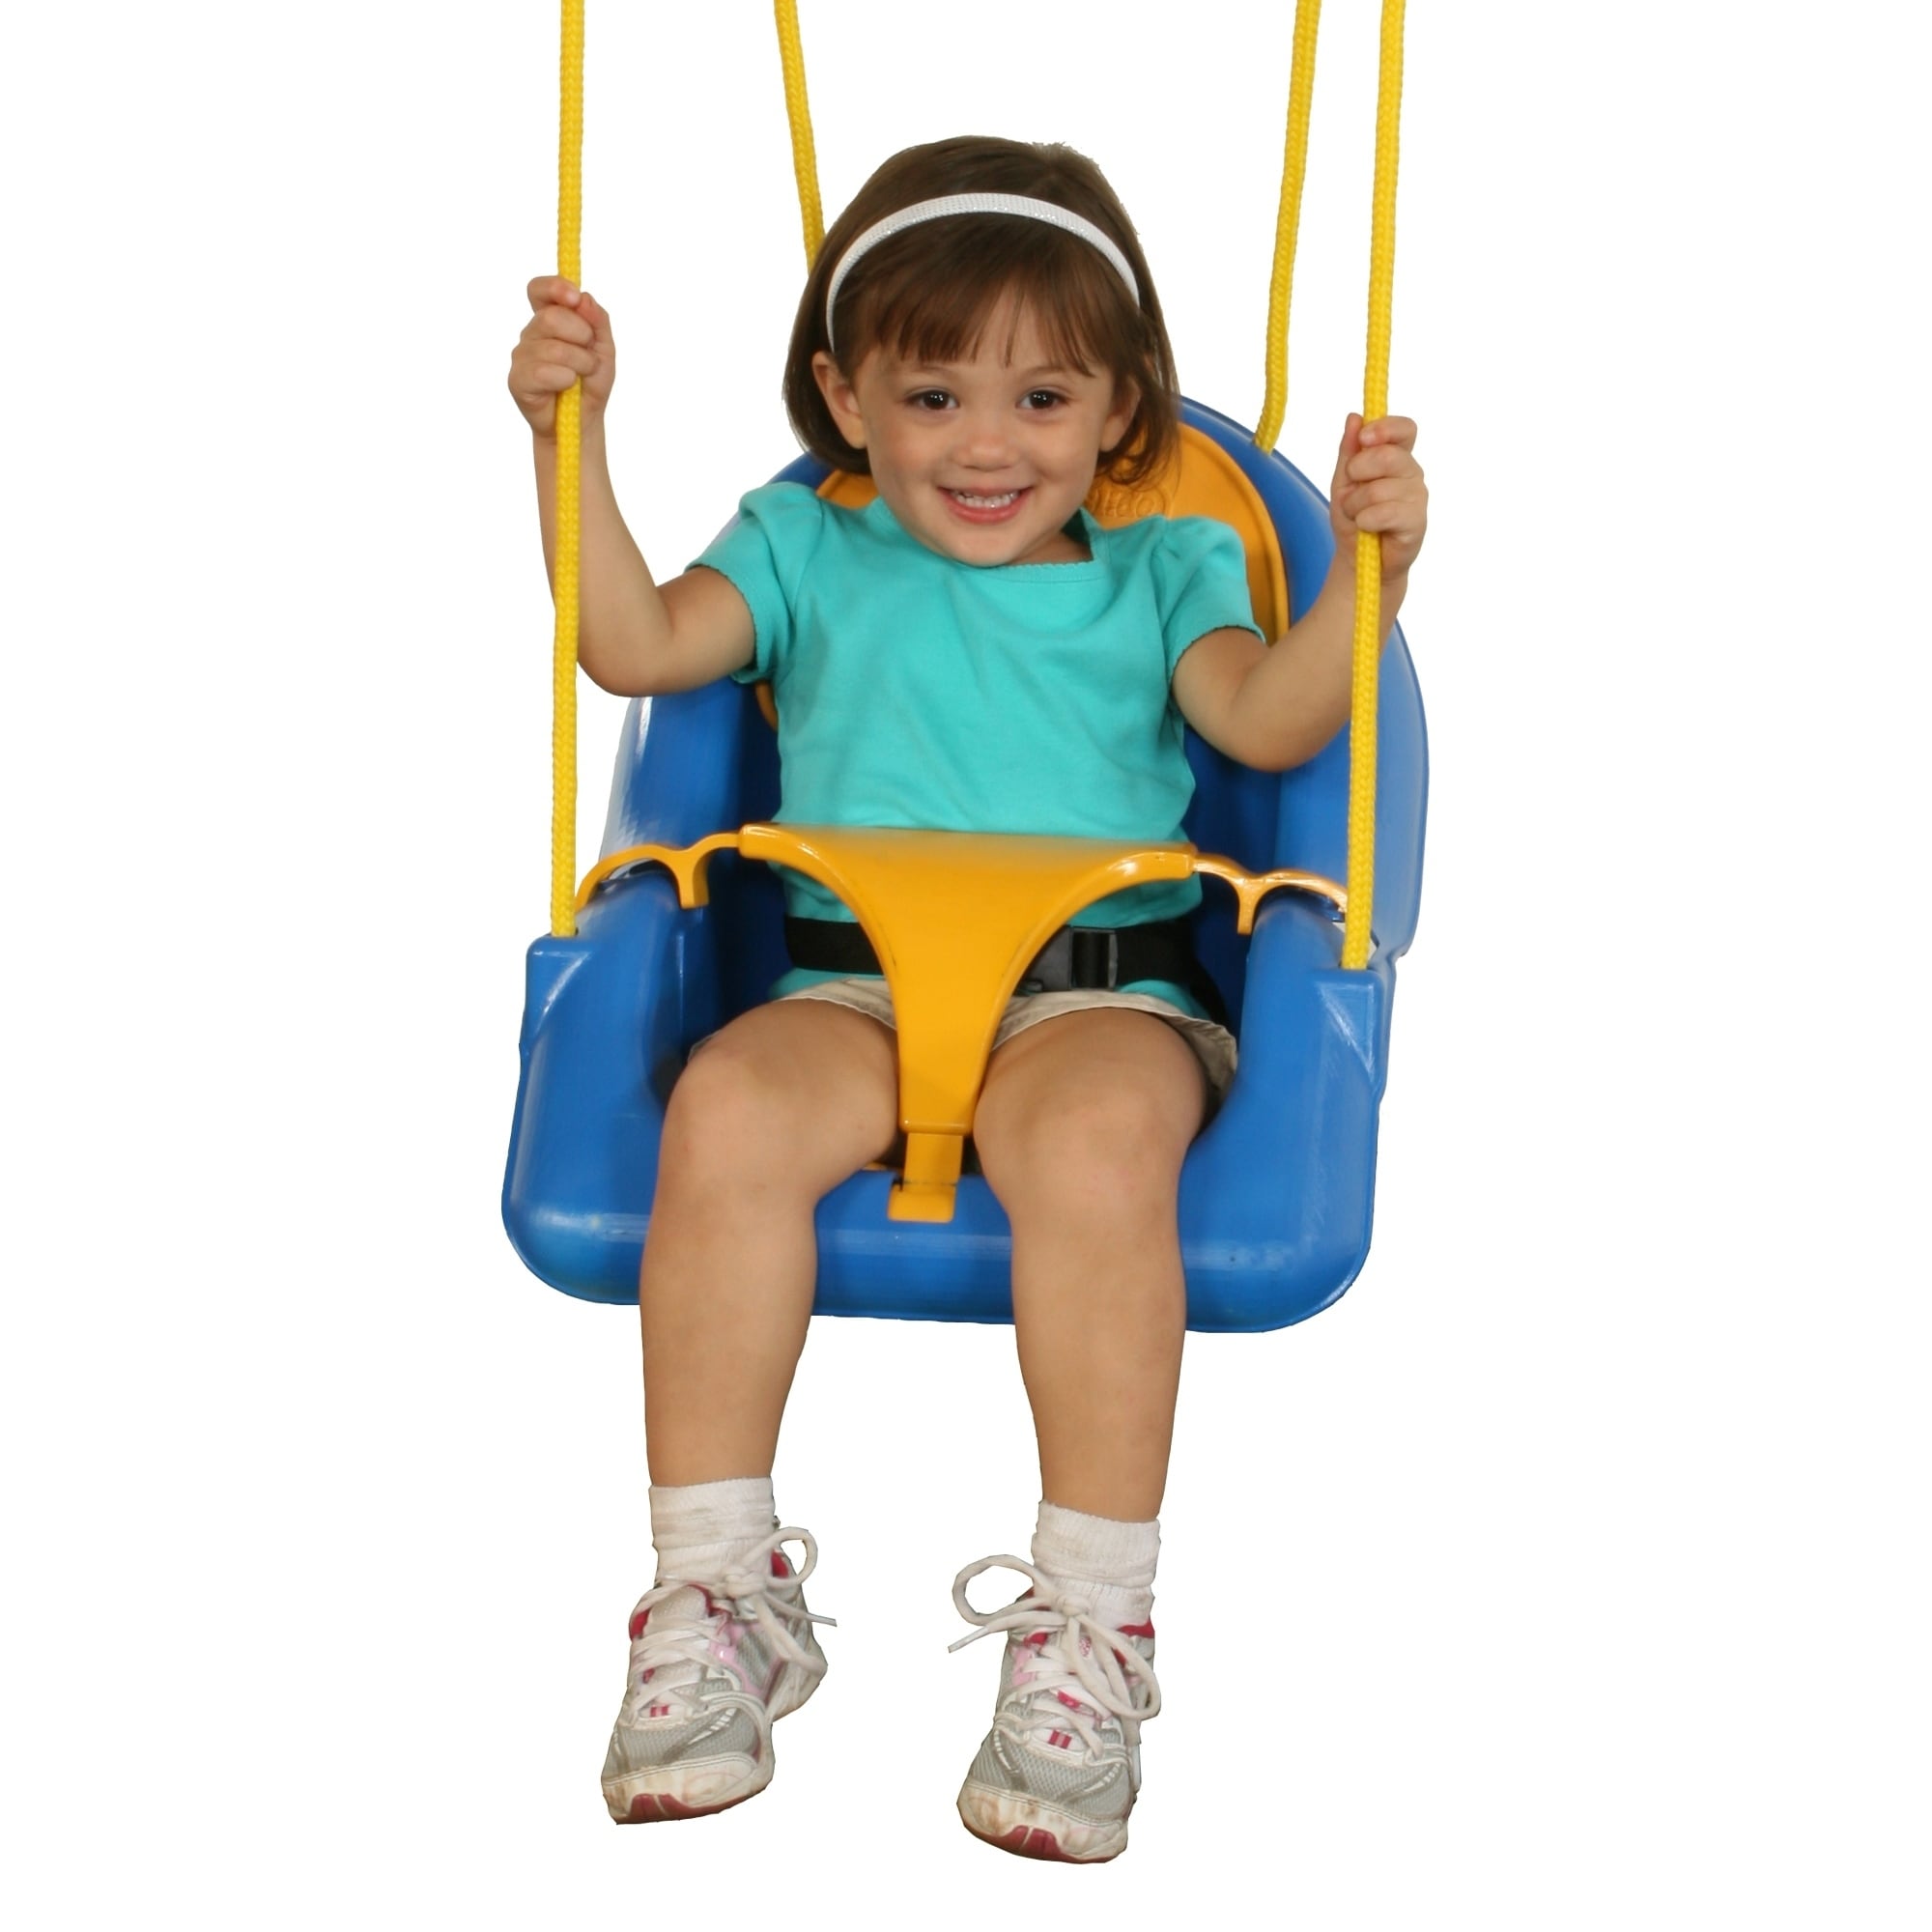 Swing-N-Slide Comfy-N-Secure Coaster Swing - Blue and Yellow - 16.2" W x 18.7" x 15.5" H - 16.2" W x 18.7" x 15.5" H